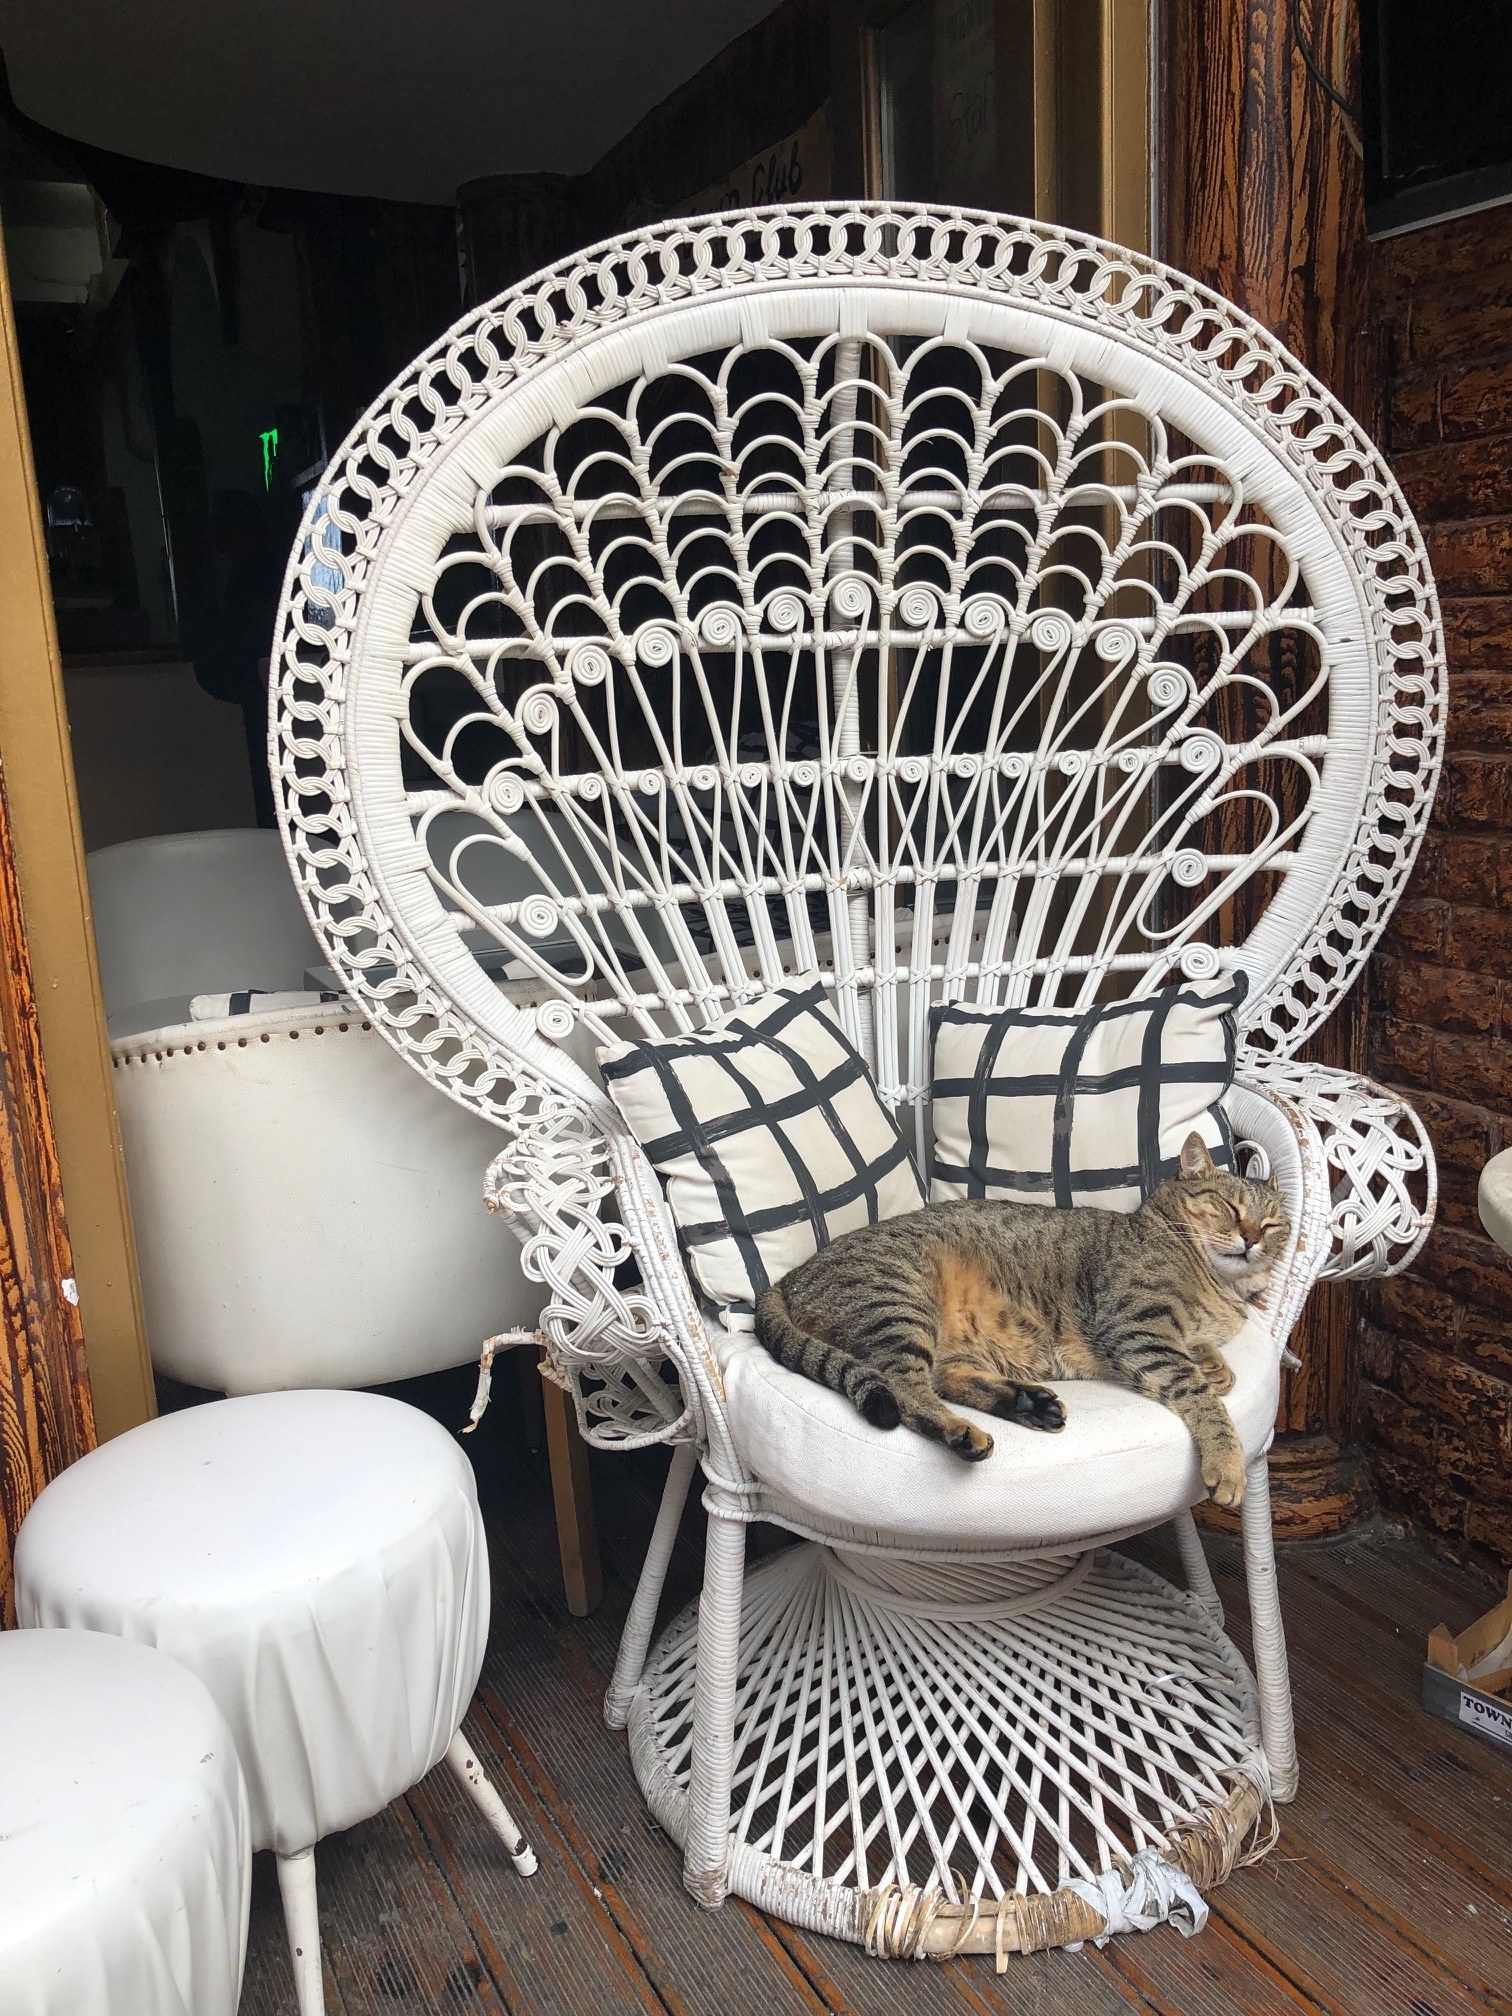 Cat sleeping on a peacock chair